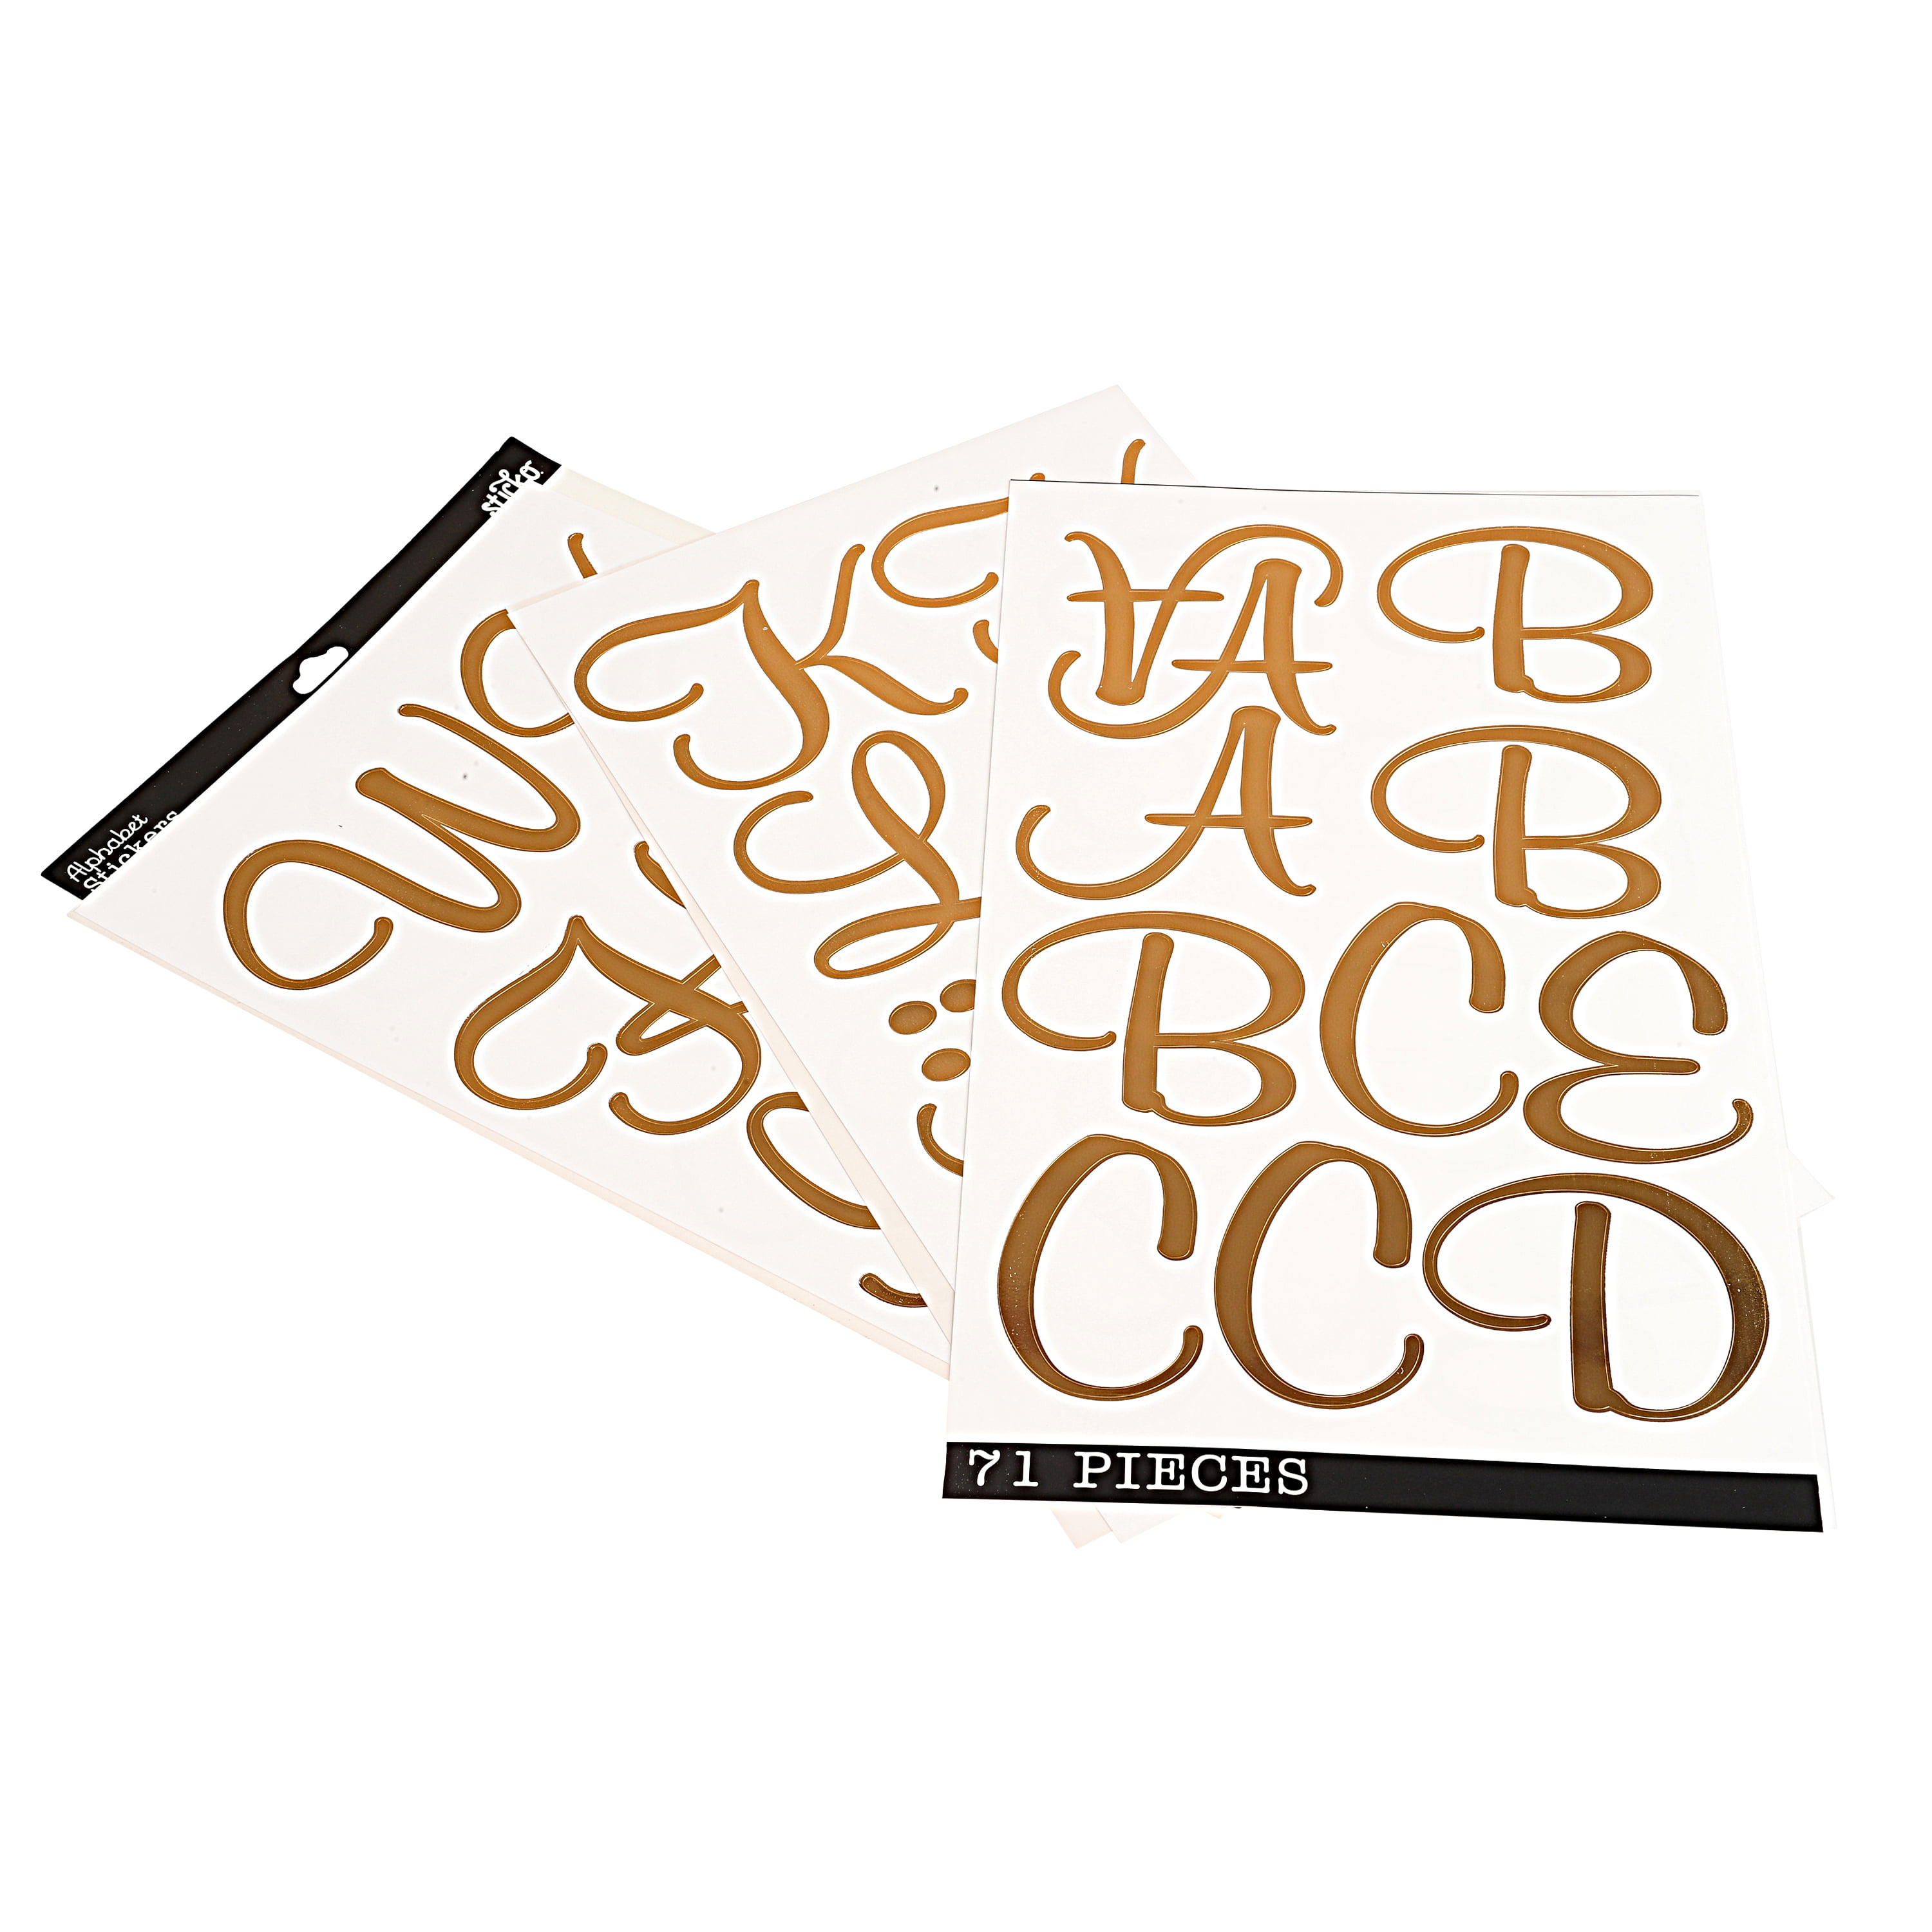 Sticko Alphabet Stickers - Script XL Gold Foil